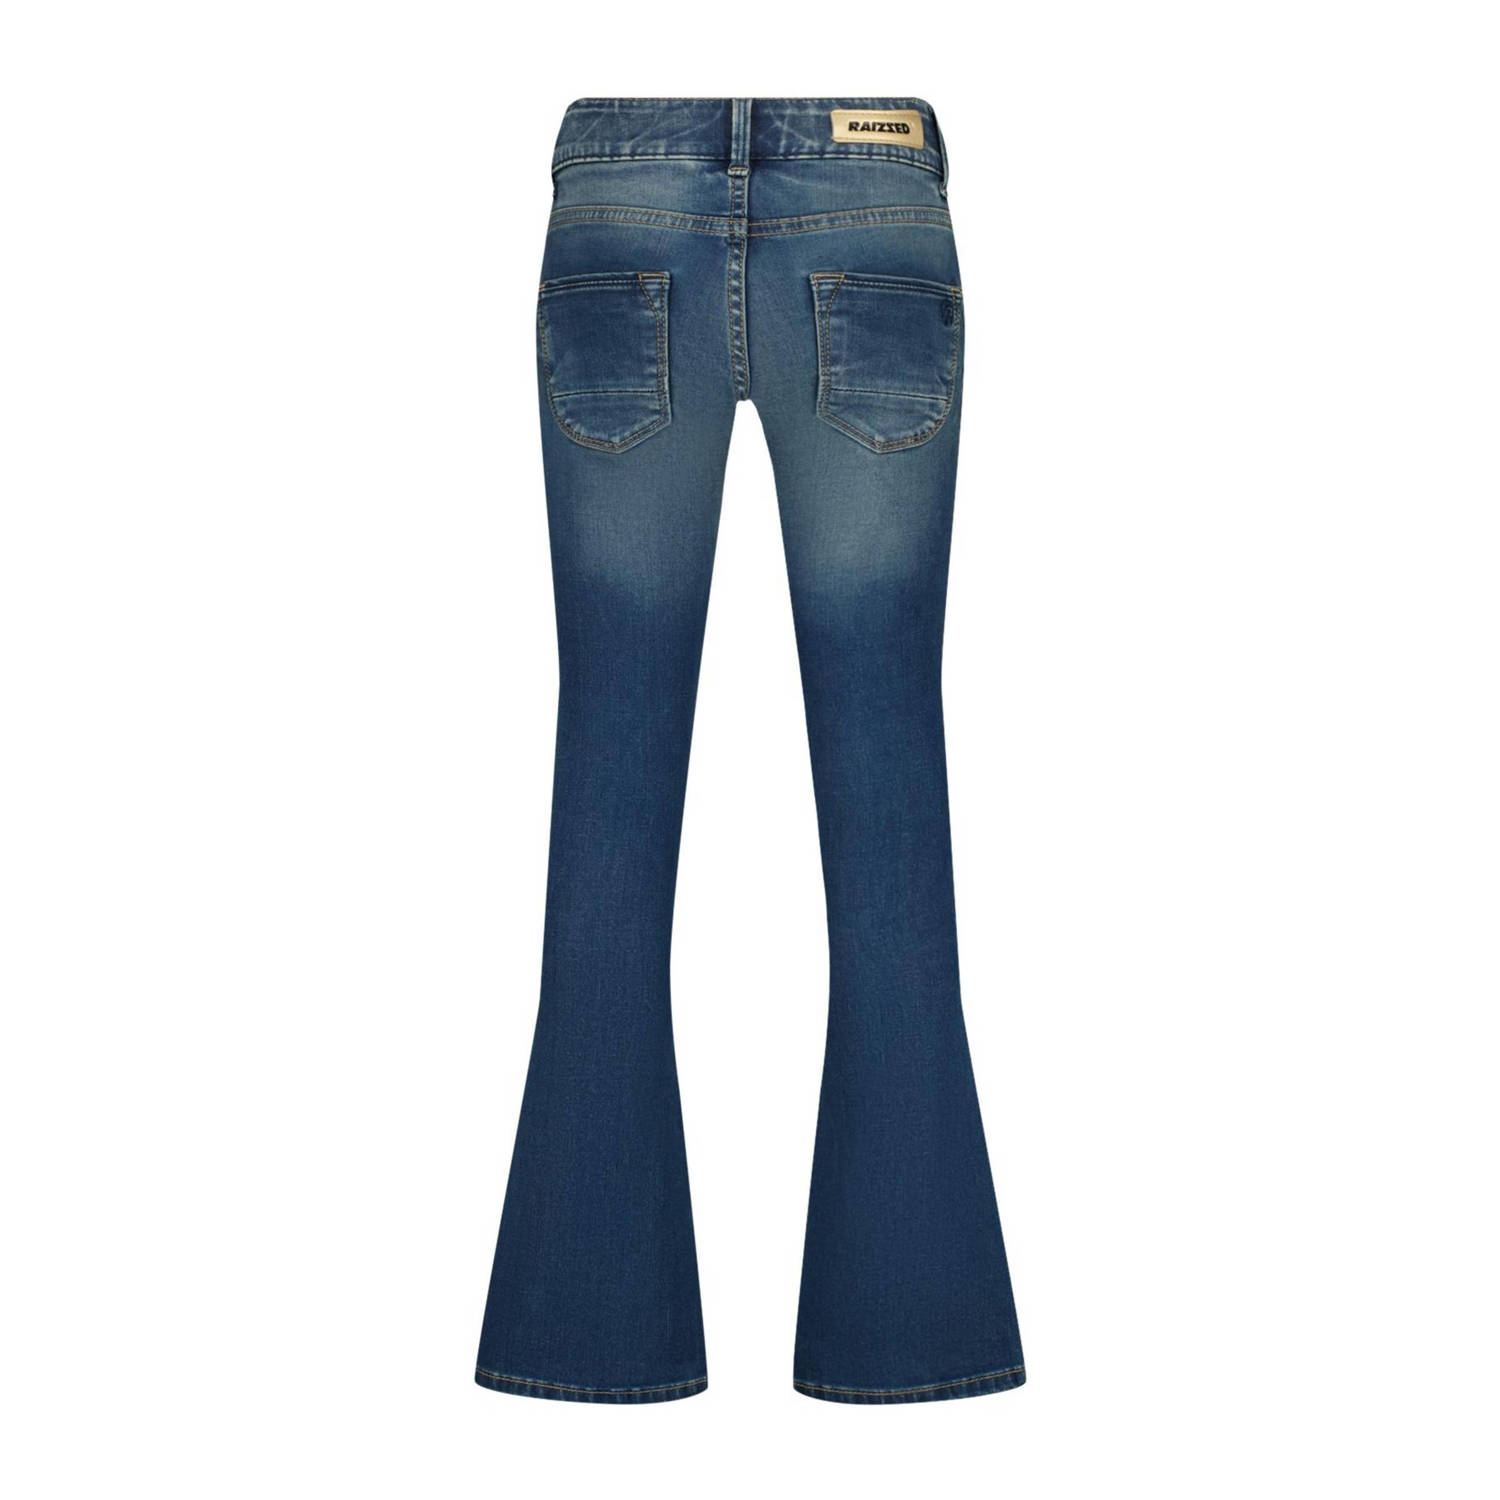 Raizzed flared jeans Melbourne dark blue stone